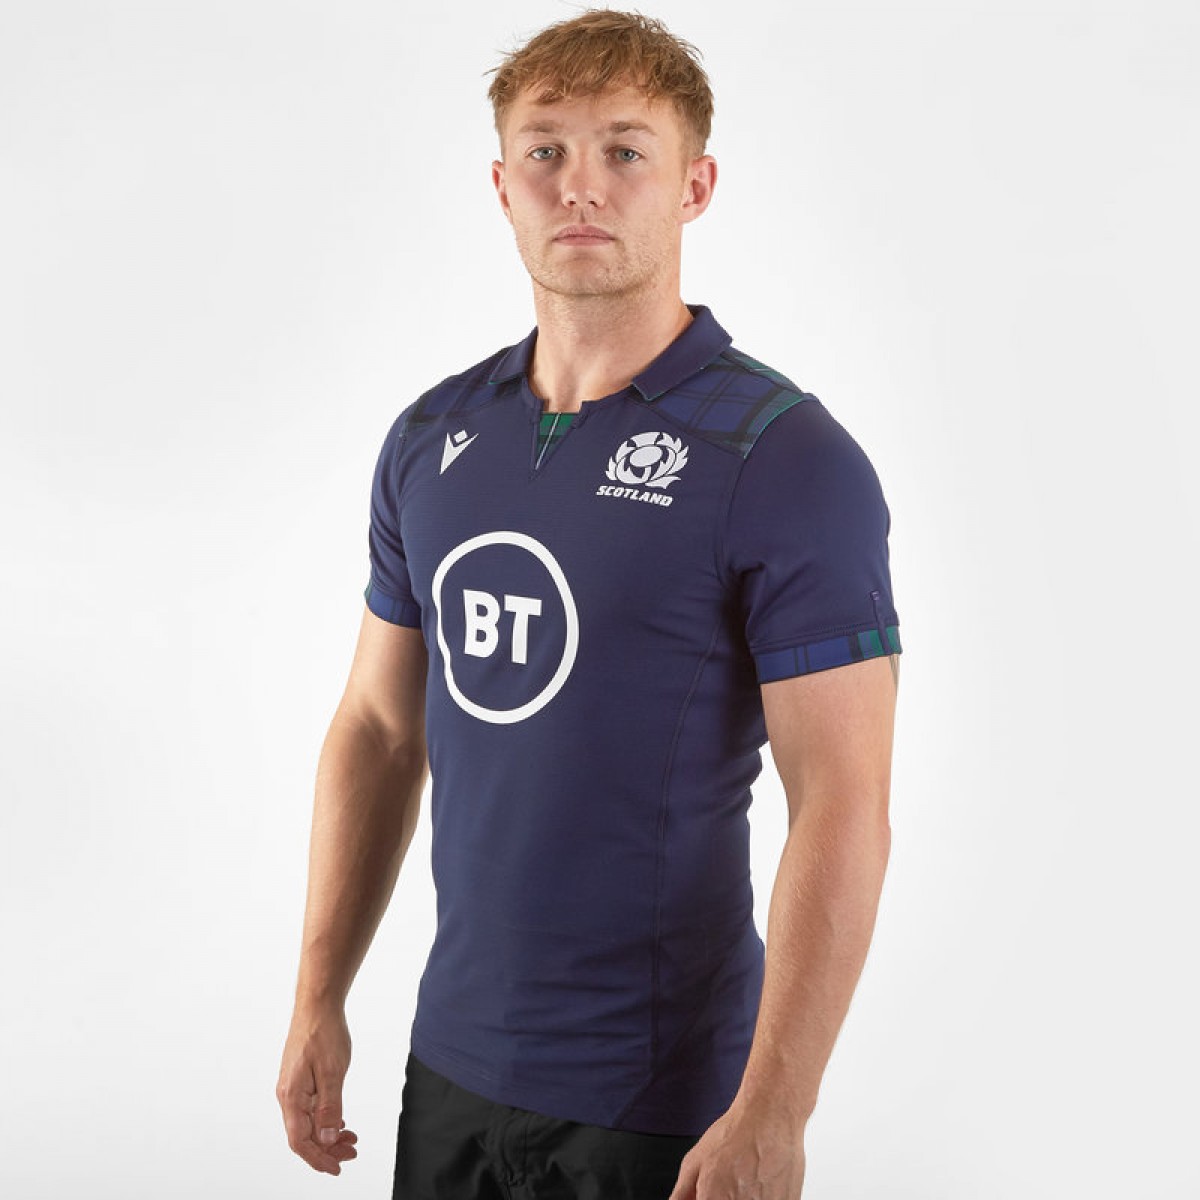 2019-20 Scotland Rugby Jersey short sleeves Man T shirt 